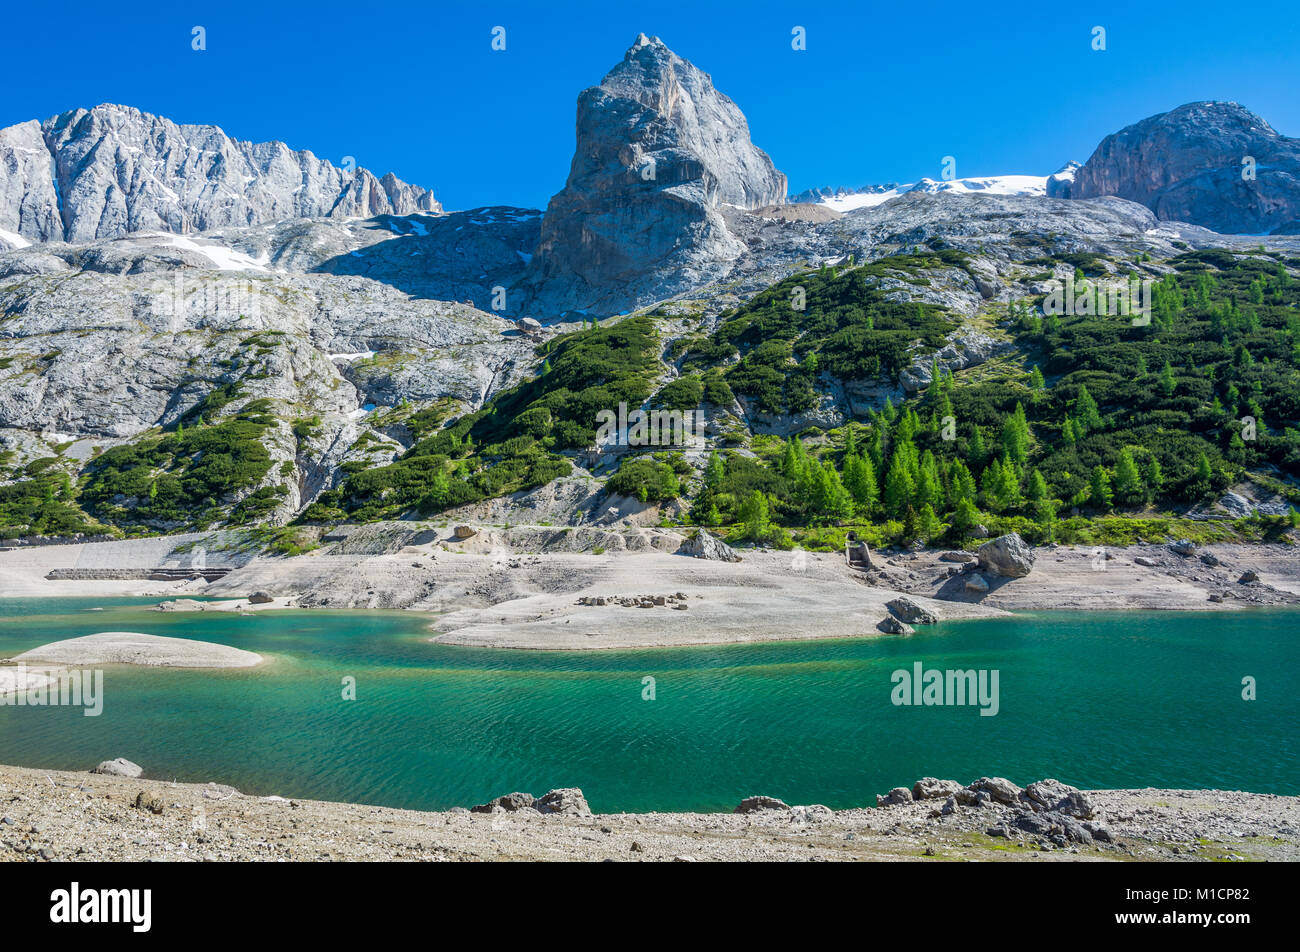 Lago Fedaia (Fedaia Lake), Fassa Valley, Trentino Alto Adige, an artificial lake and a dam near Canazei city, located at the foot of Marmolada massif. Stock Photo